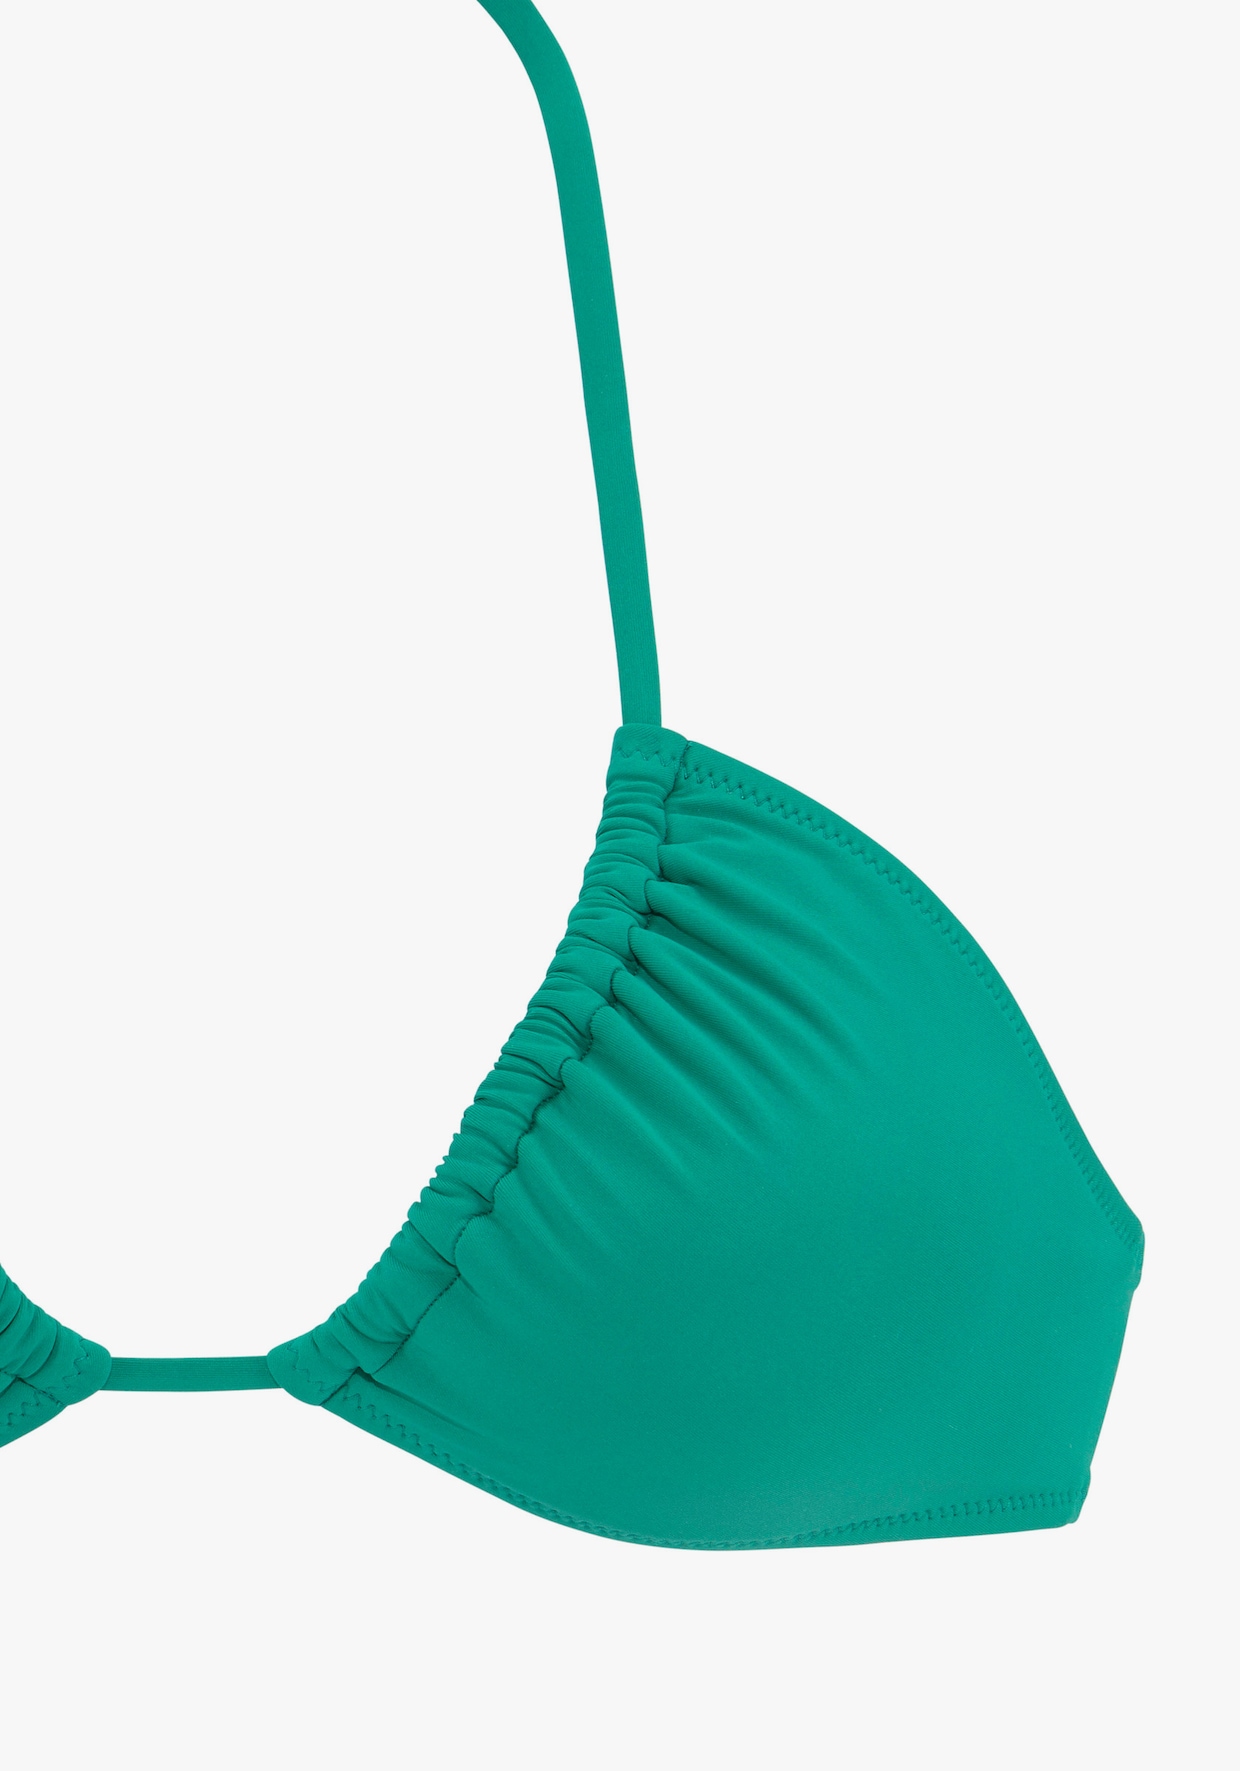 LASCANA Triangel-Bikini - grün